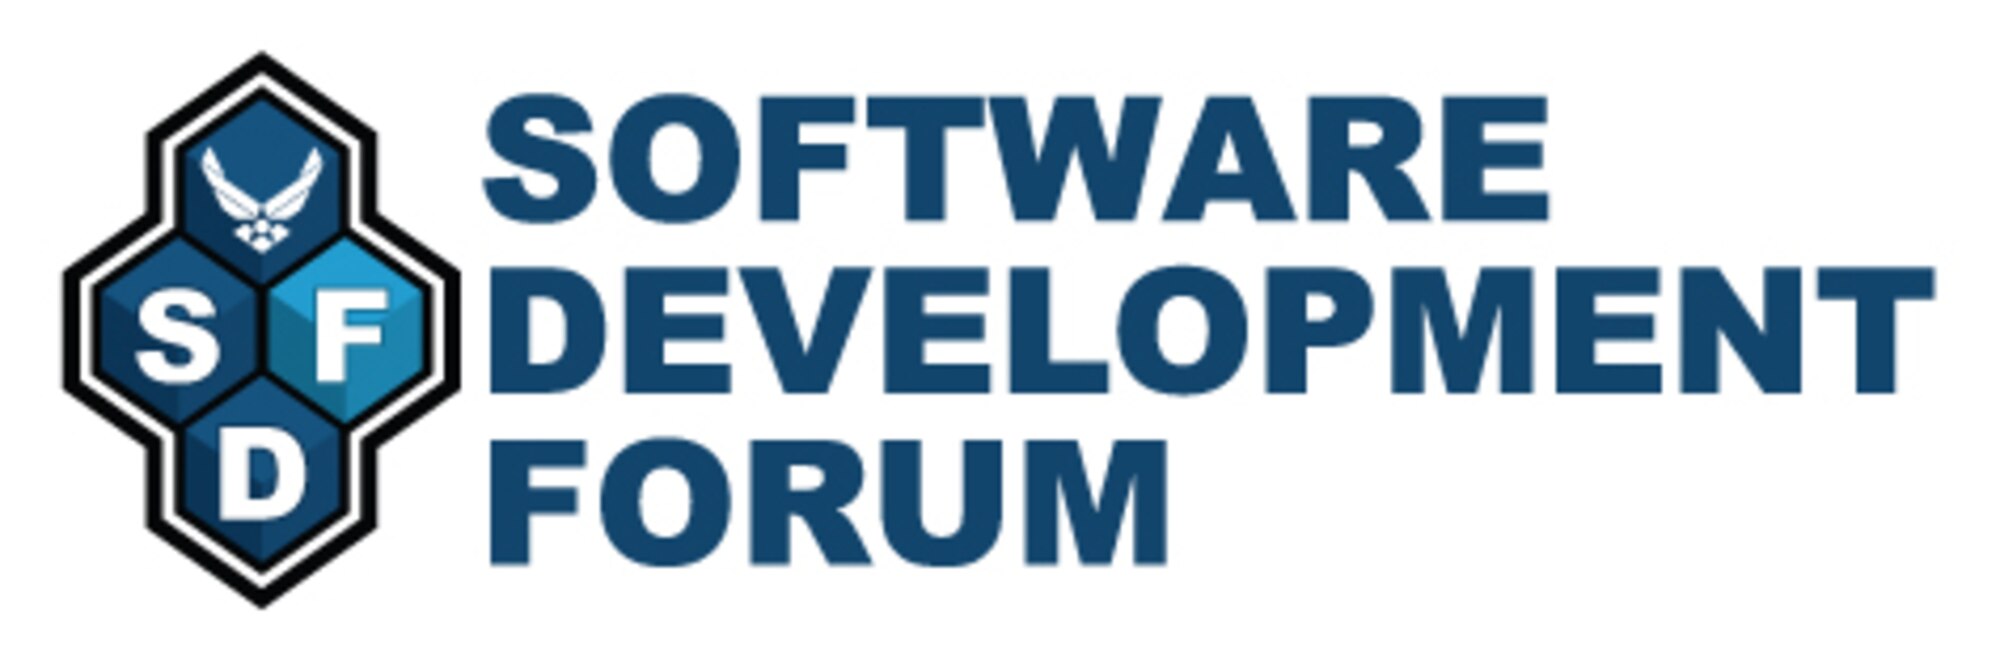 AFNIC Software Development Forum logo